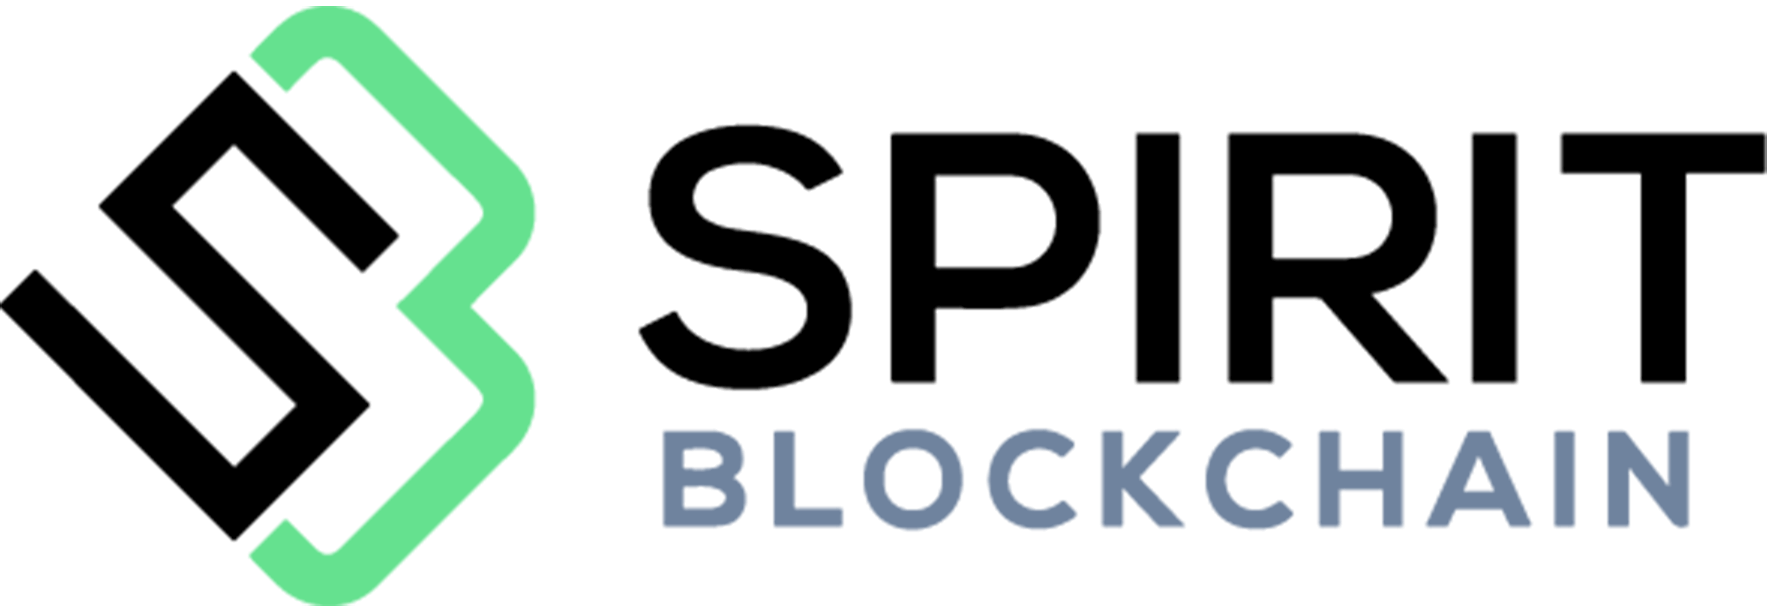 Spirit Blockchain | Lead investor